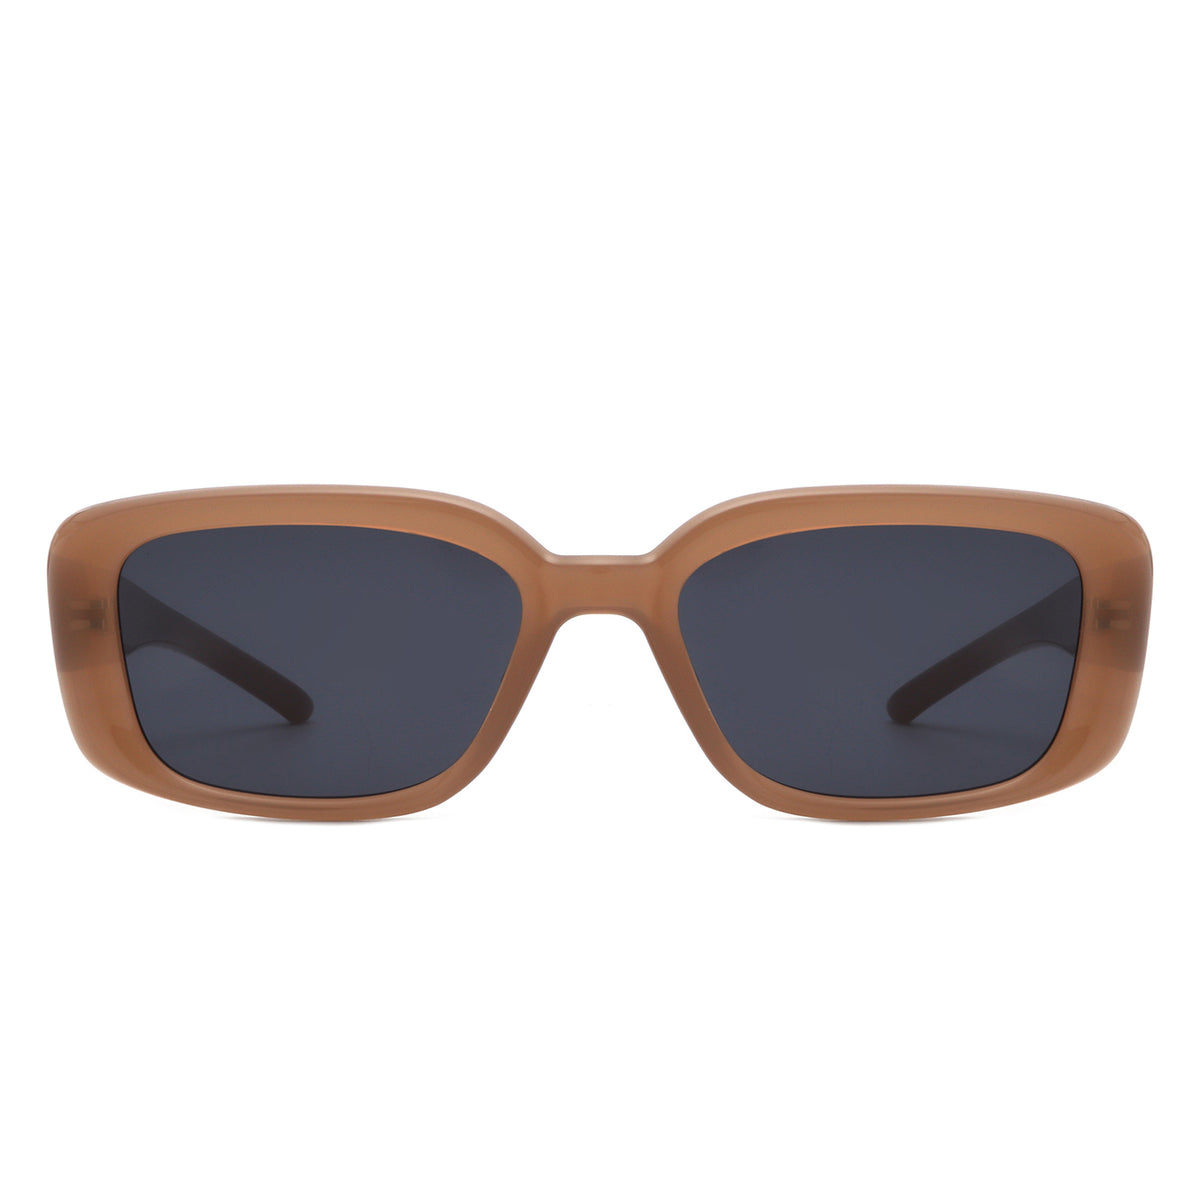 HS1205 - Rectangle Retro Flat Top Vintage Inspired Square Wholesale Sunglasses